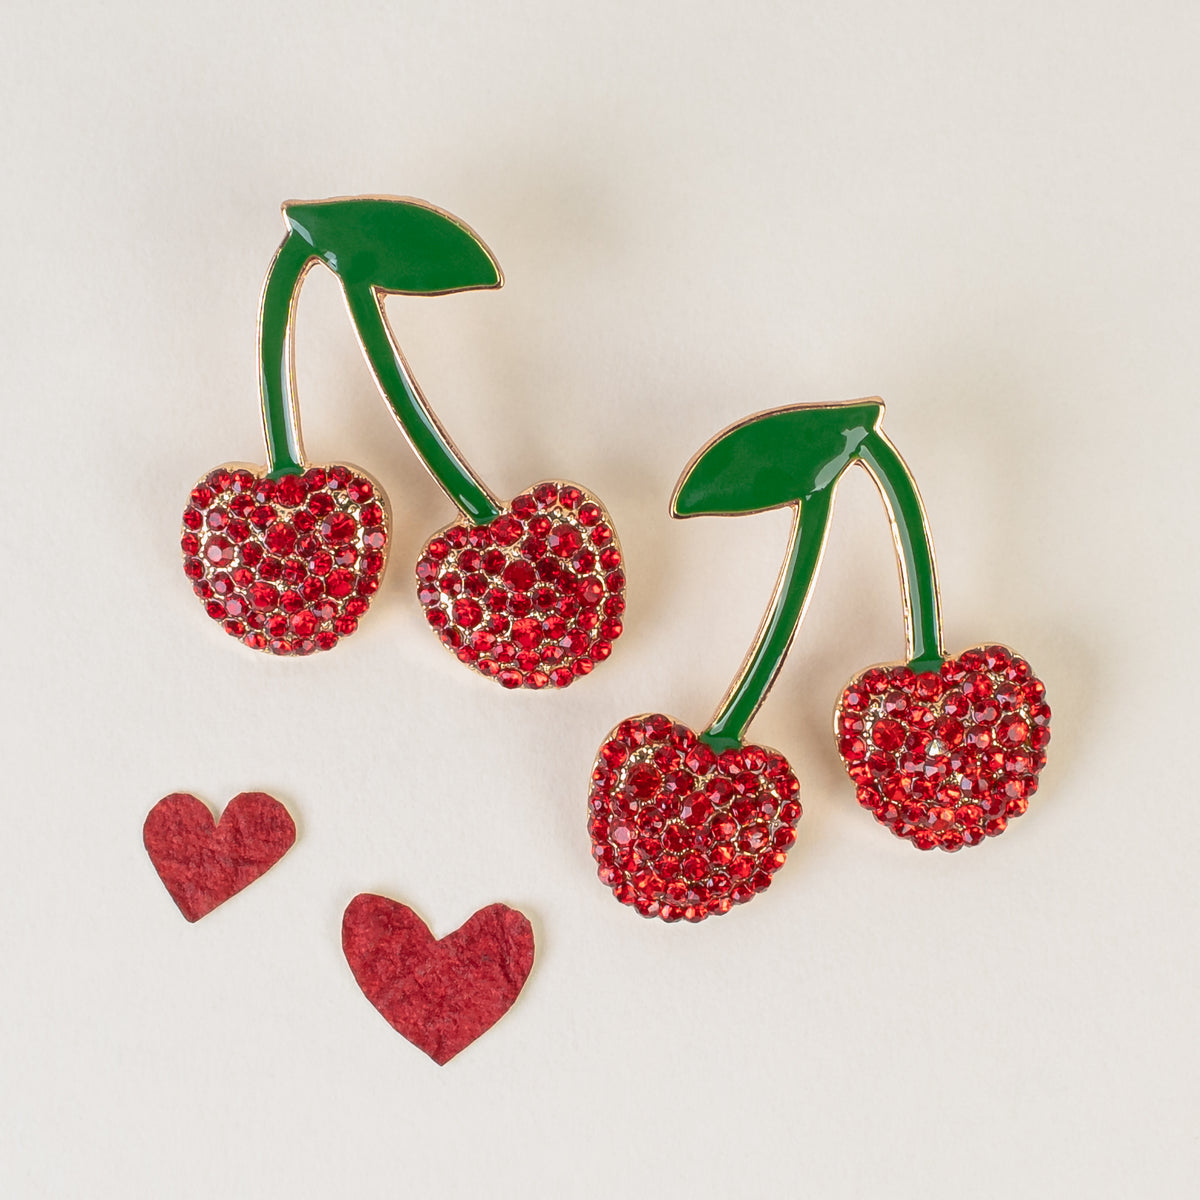 CHERRY BOMB - Cherry Earrings - Red